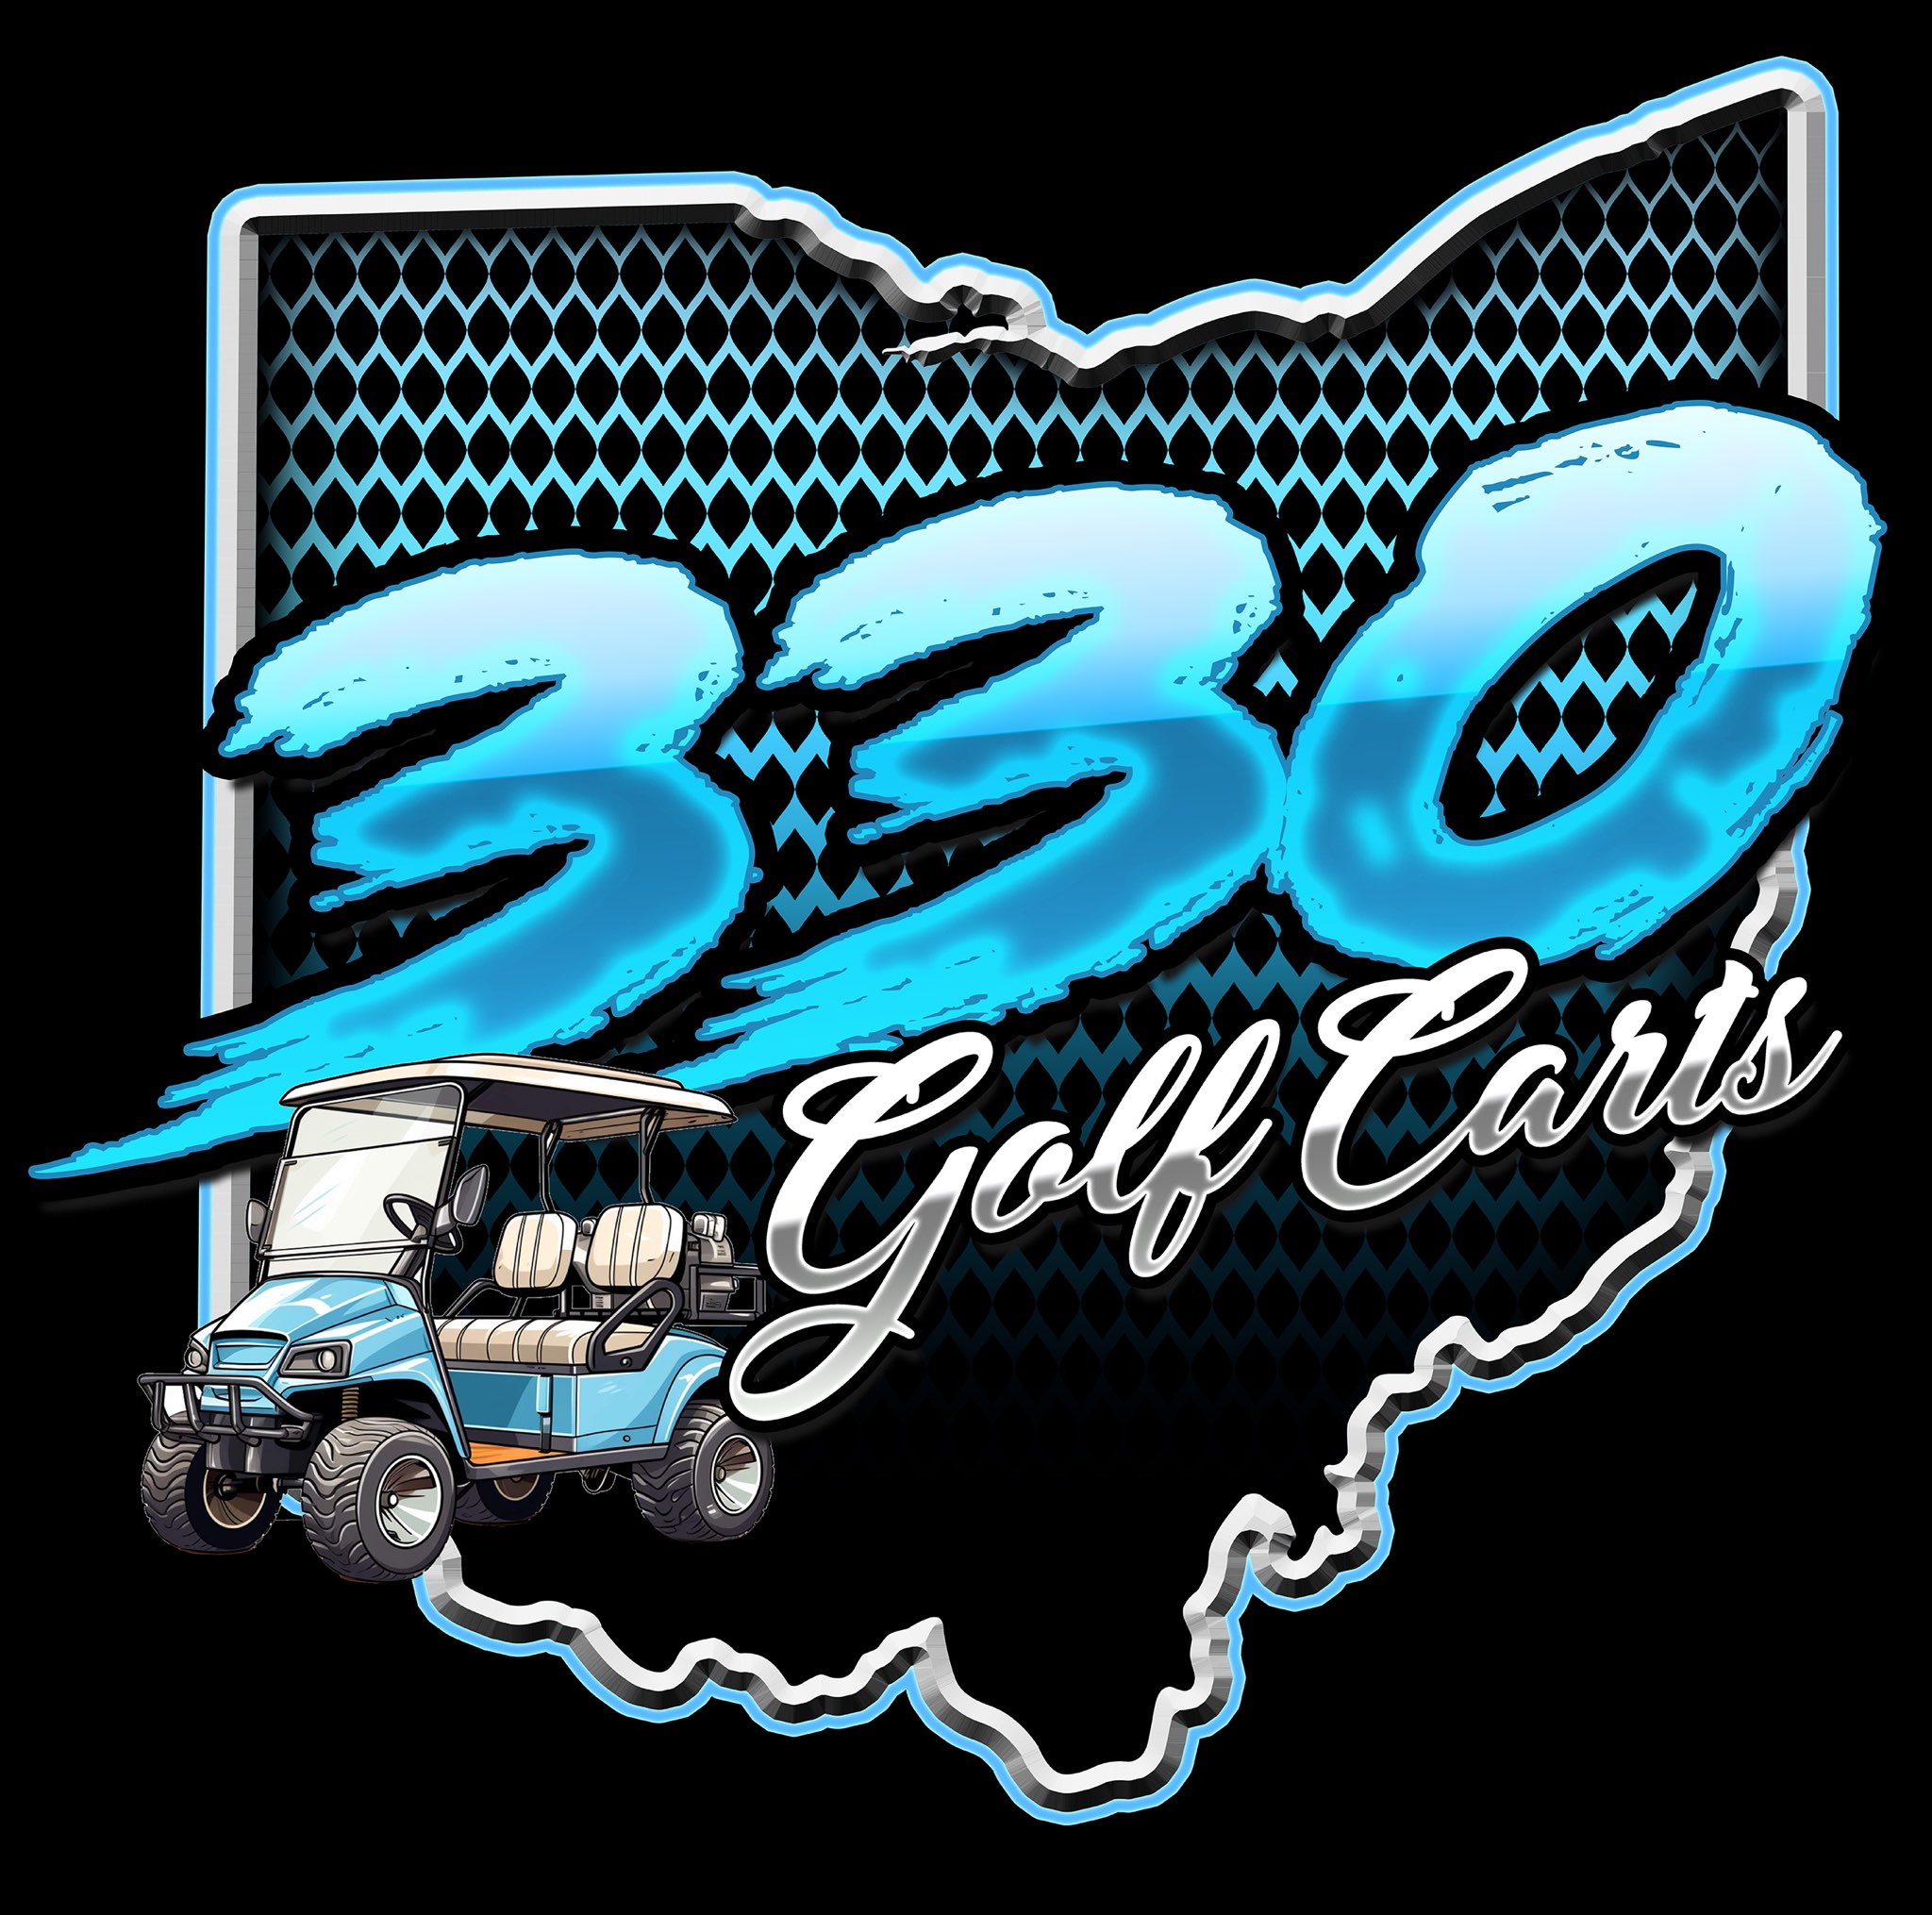 330 golf carts